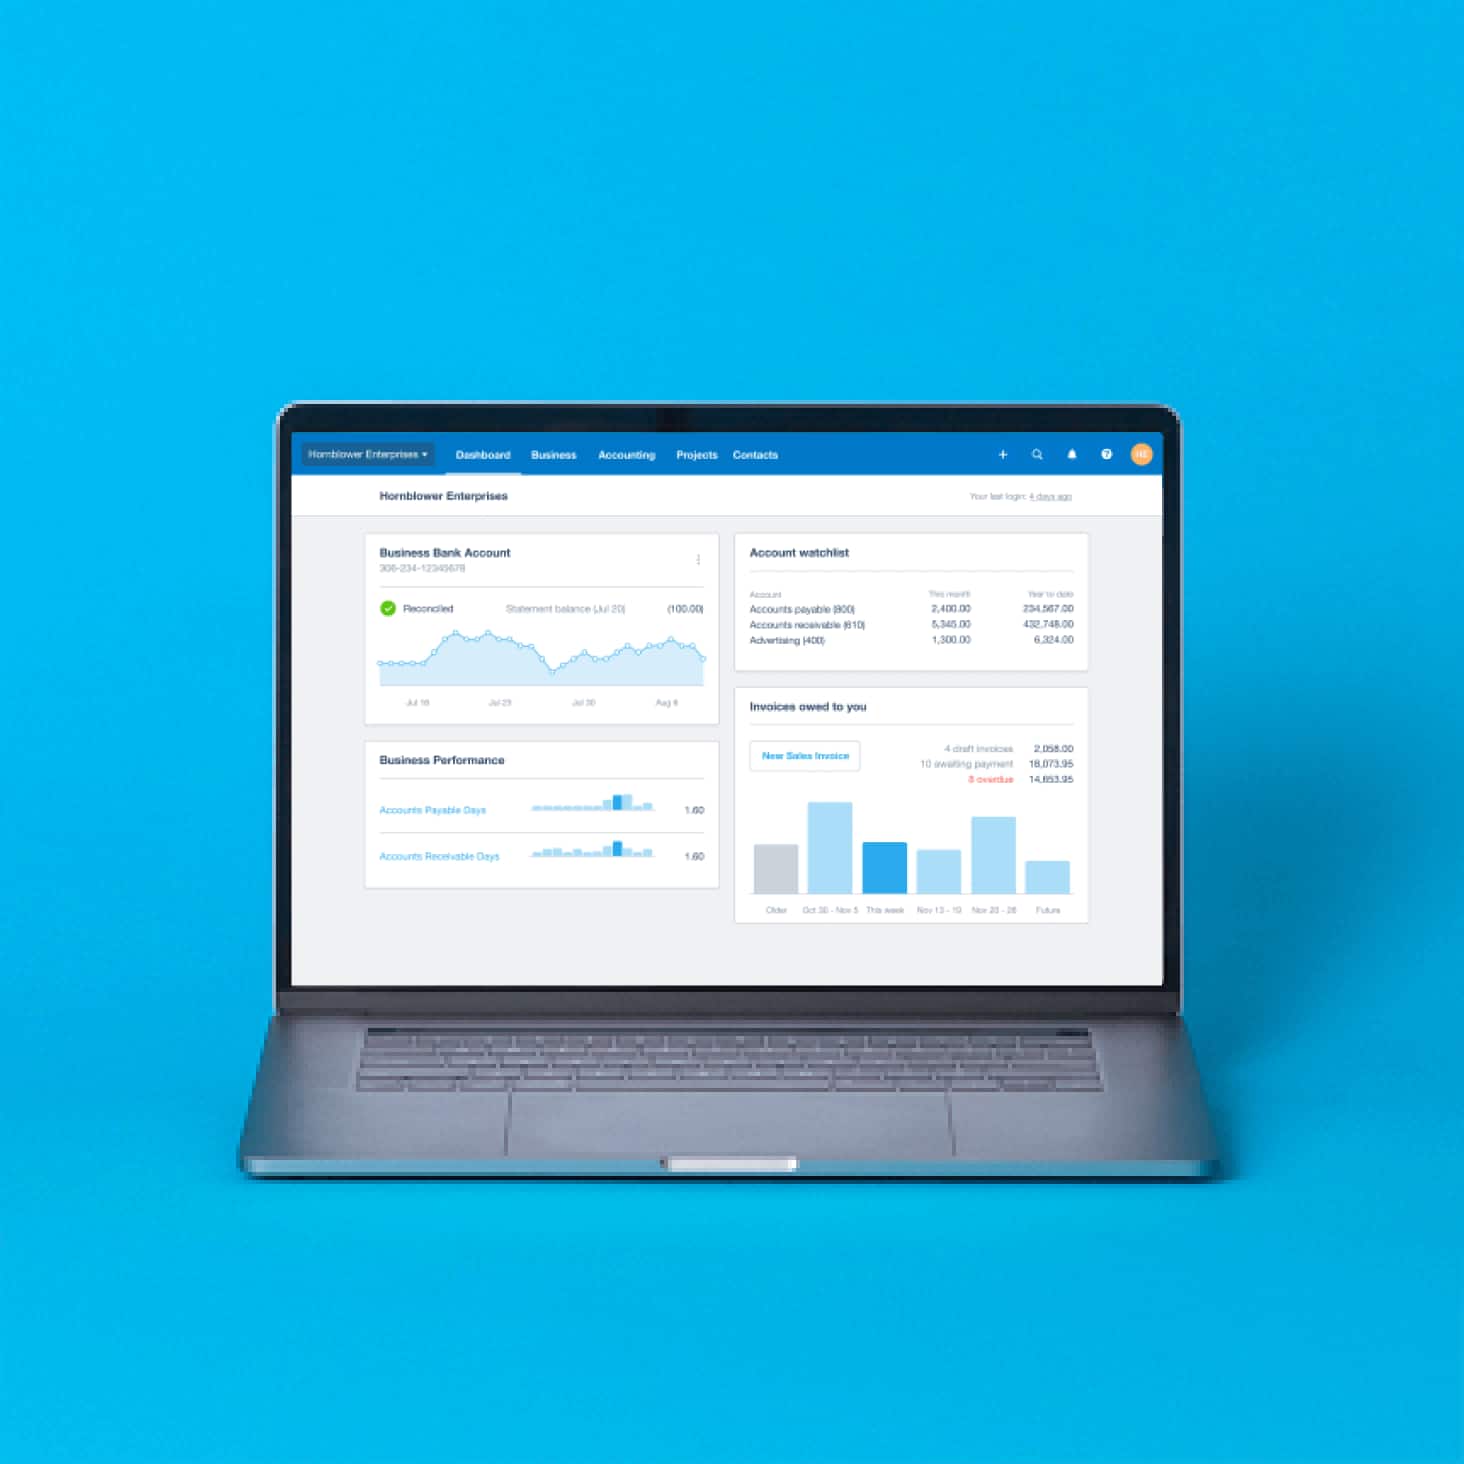 The Xero dashboard displays charts of key business metrics on a laptop screen.